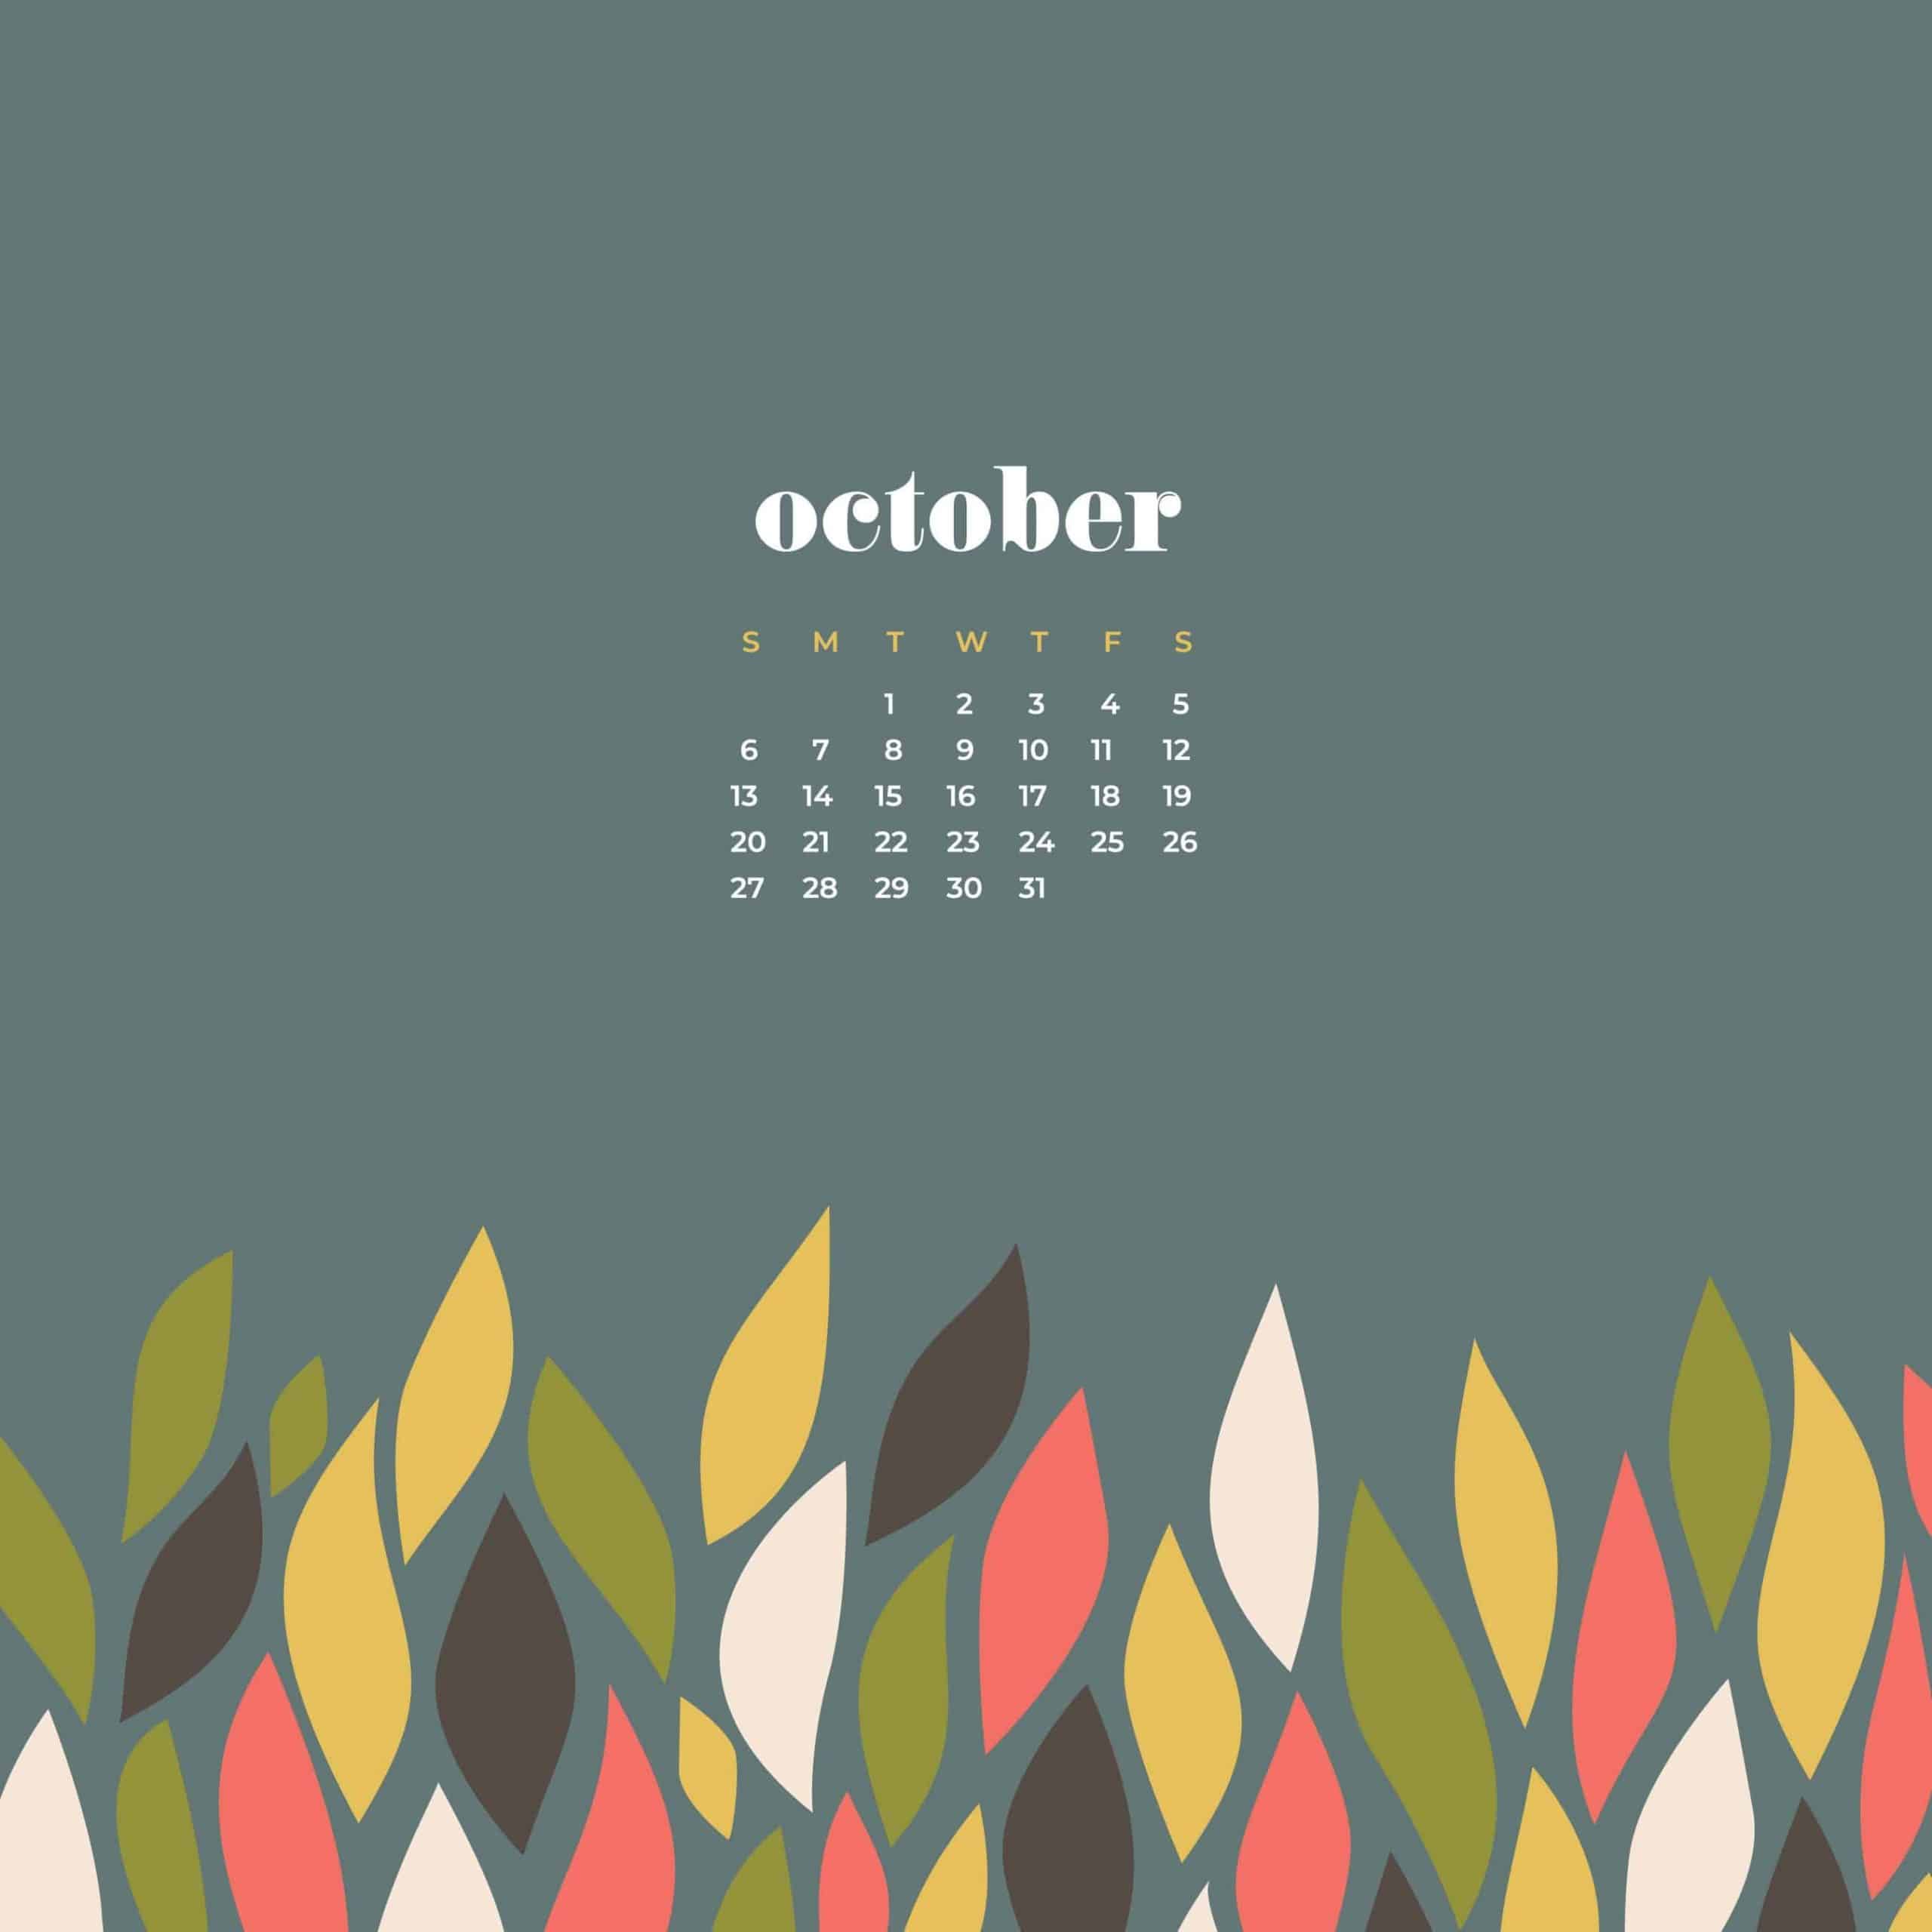 FREE October 2019 desktop wallpaper